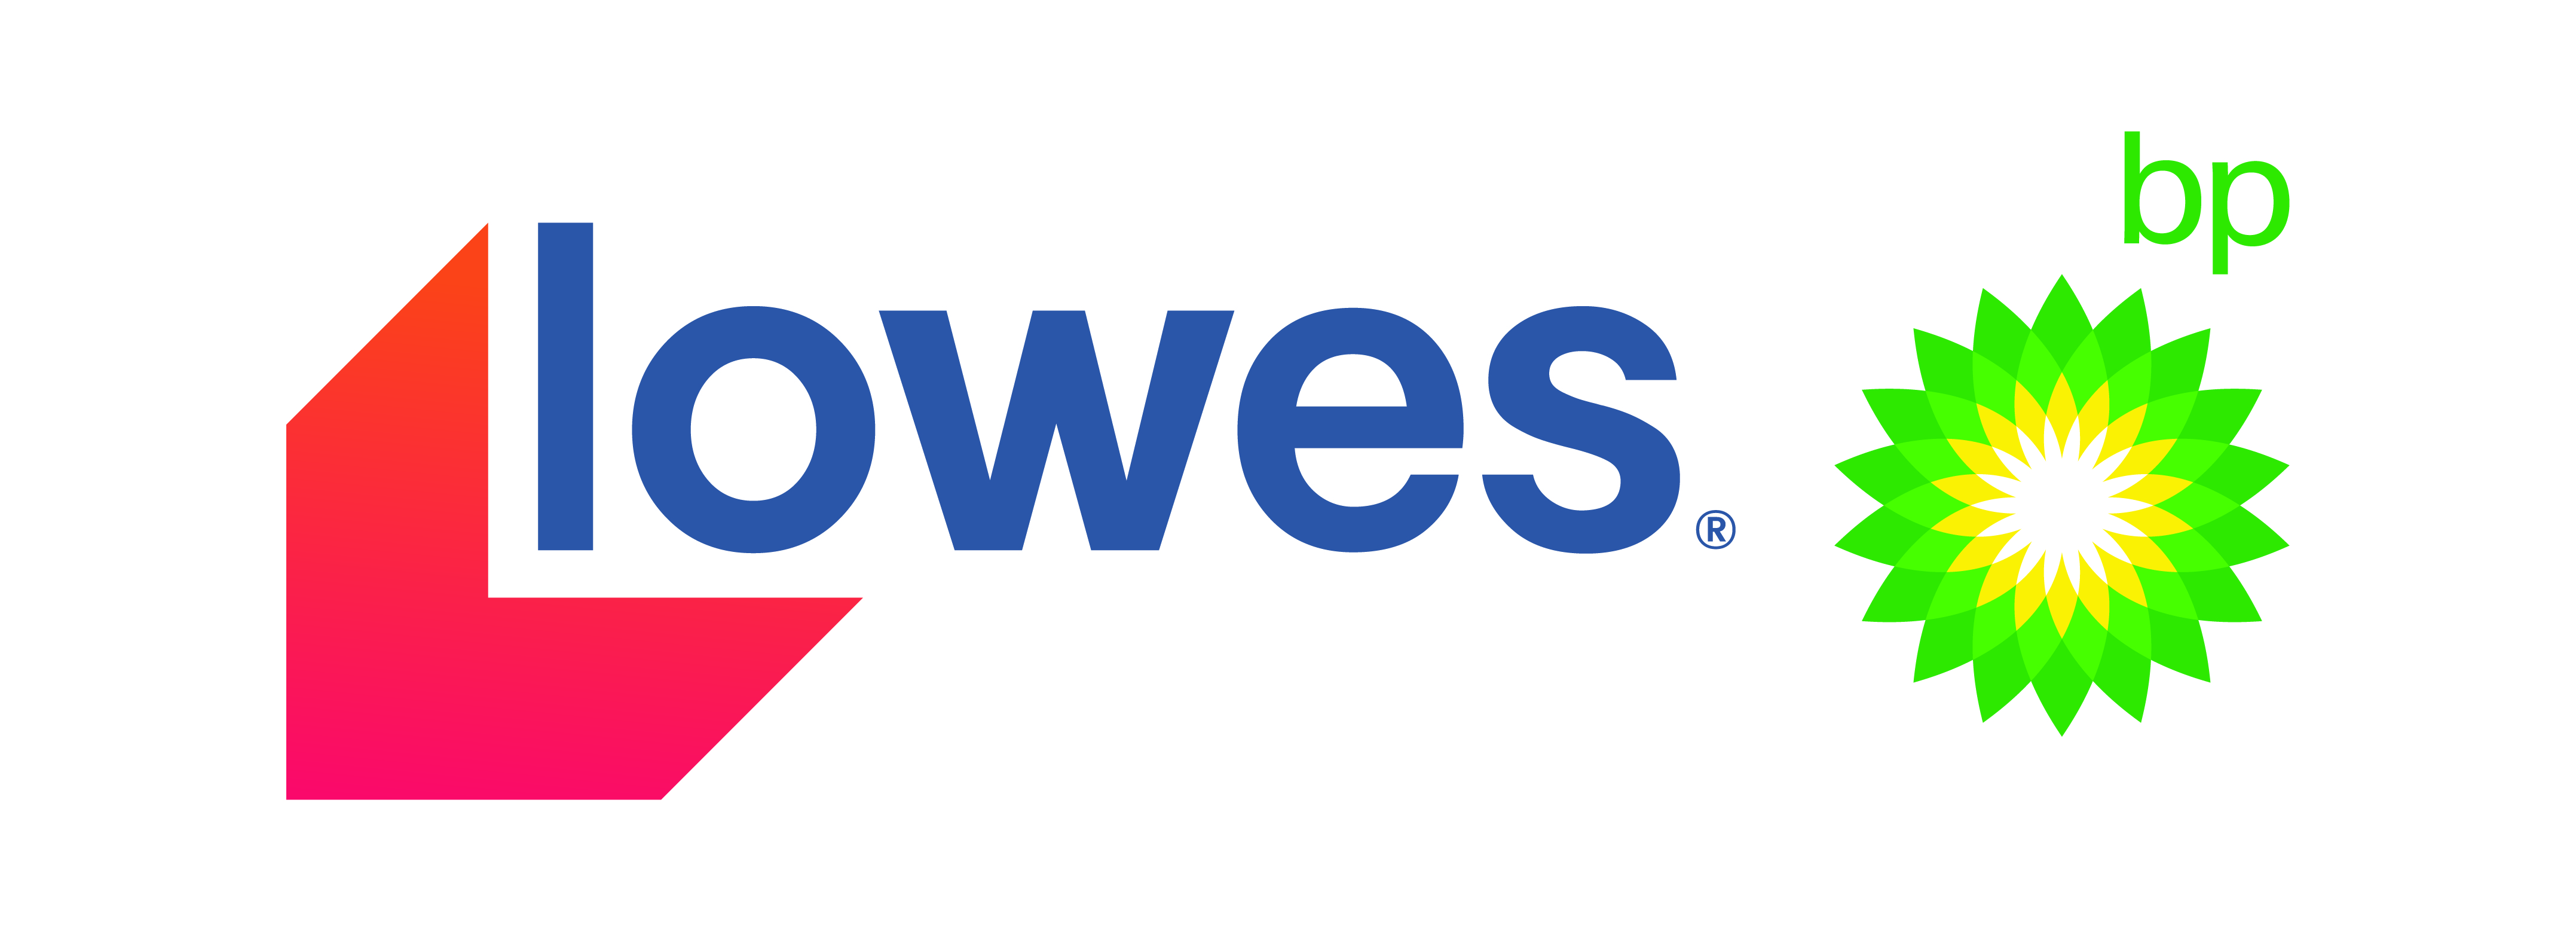 Lowes Logo On White bp Green